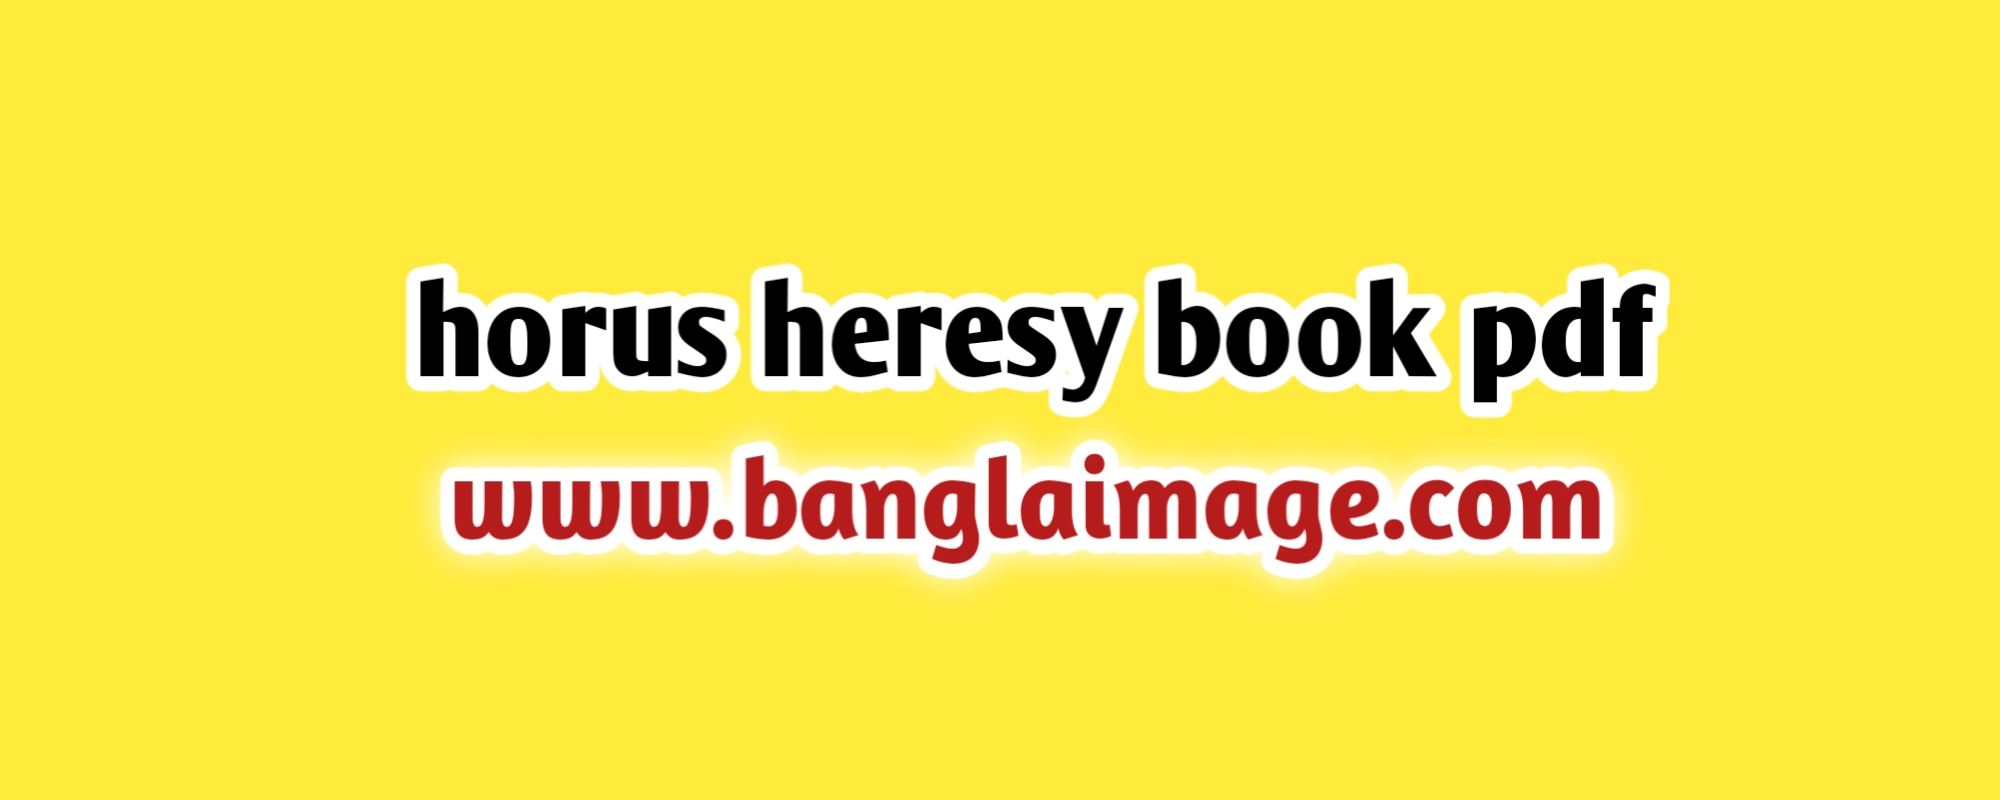 horus heresy book pdf, horus heresy book pdf online, horus heresy book pdf free, the horus heresy book pdf online